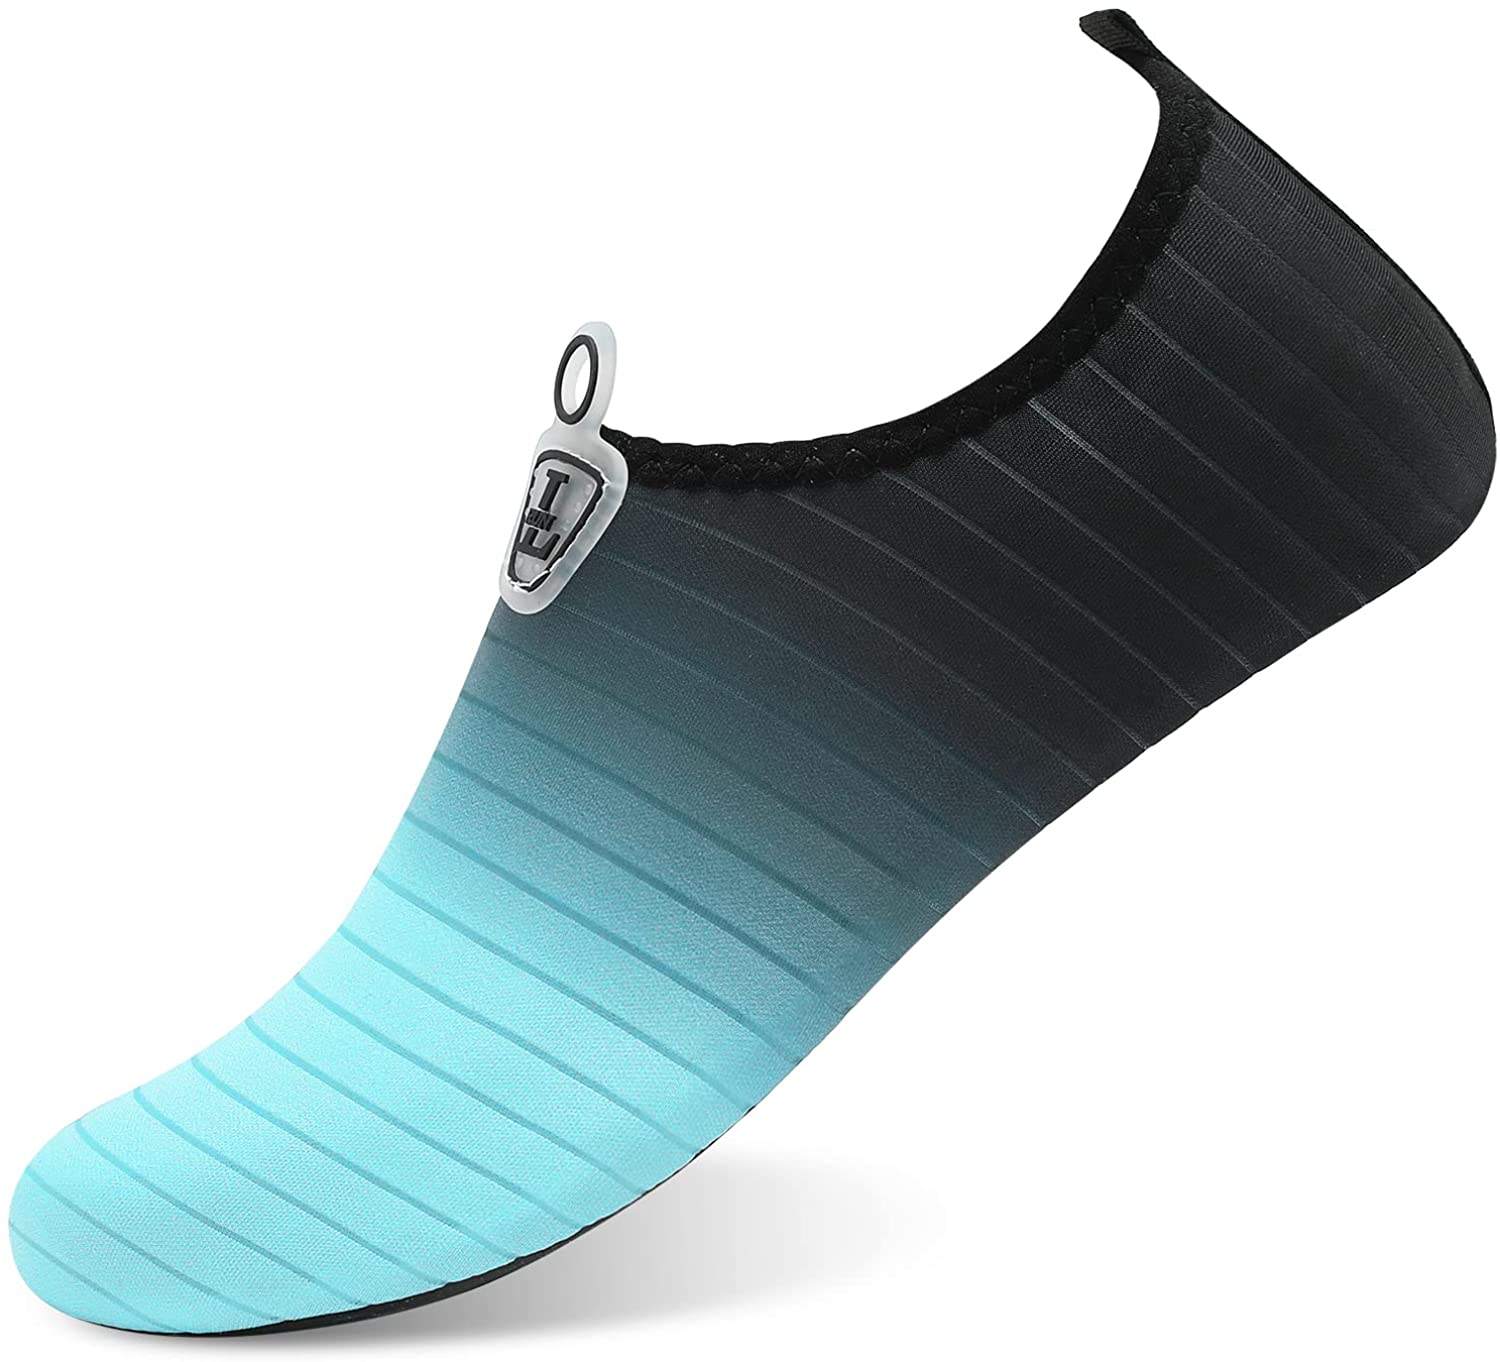 L-RUN Unisex Water Shoes Barefoot Skin Shoes for Run Dive Surf Swim Beach Yoga 